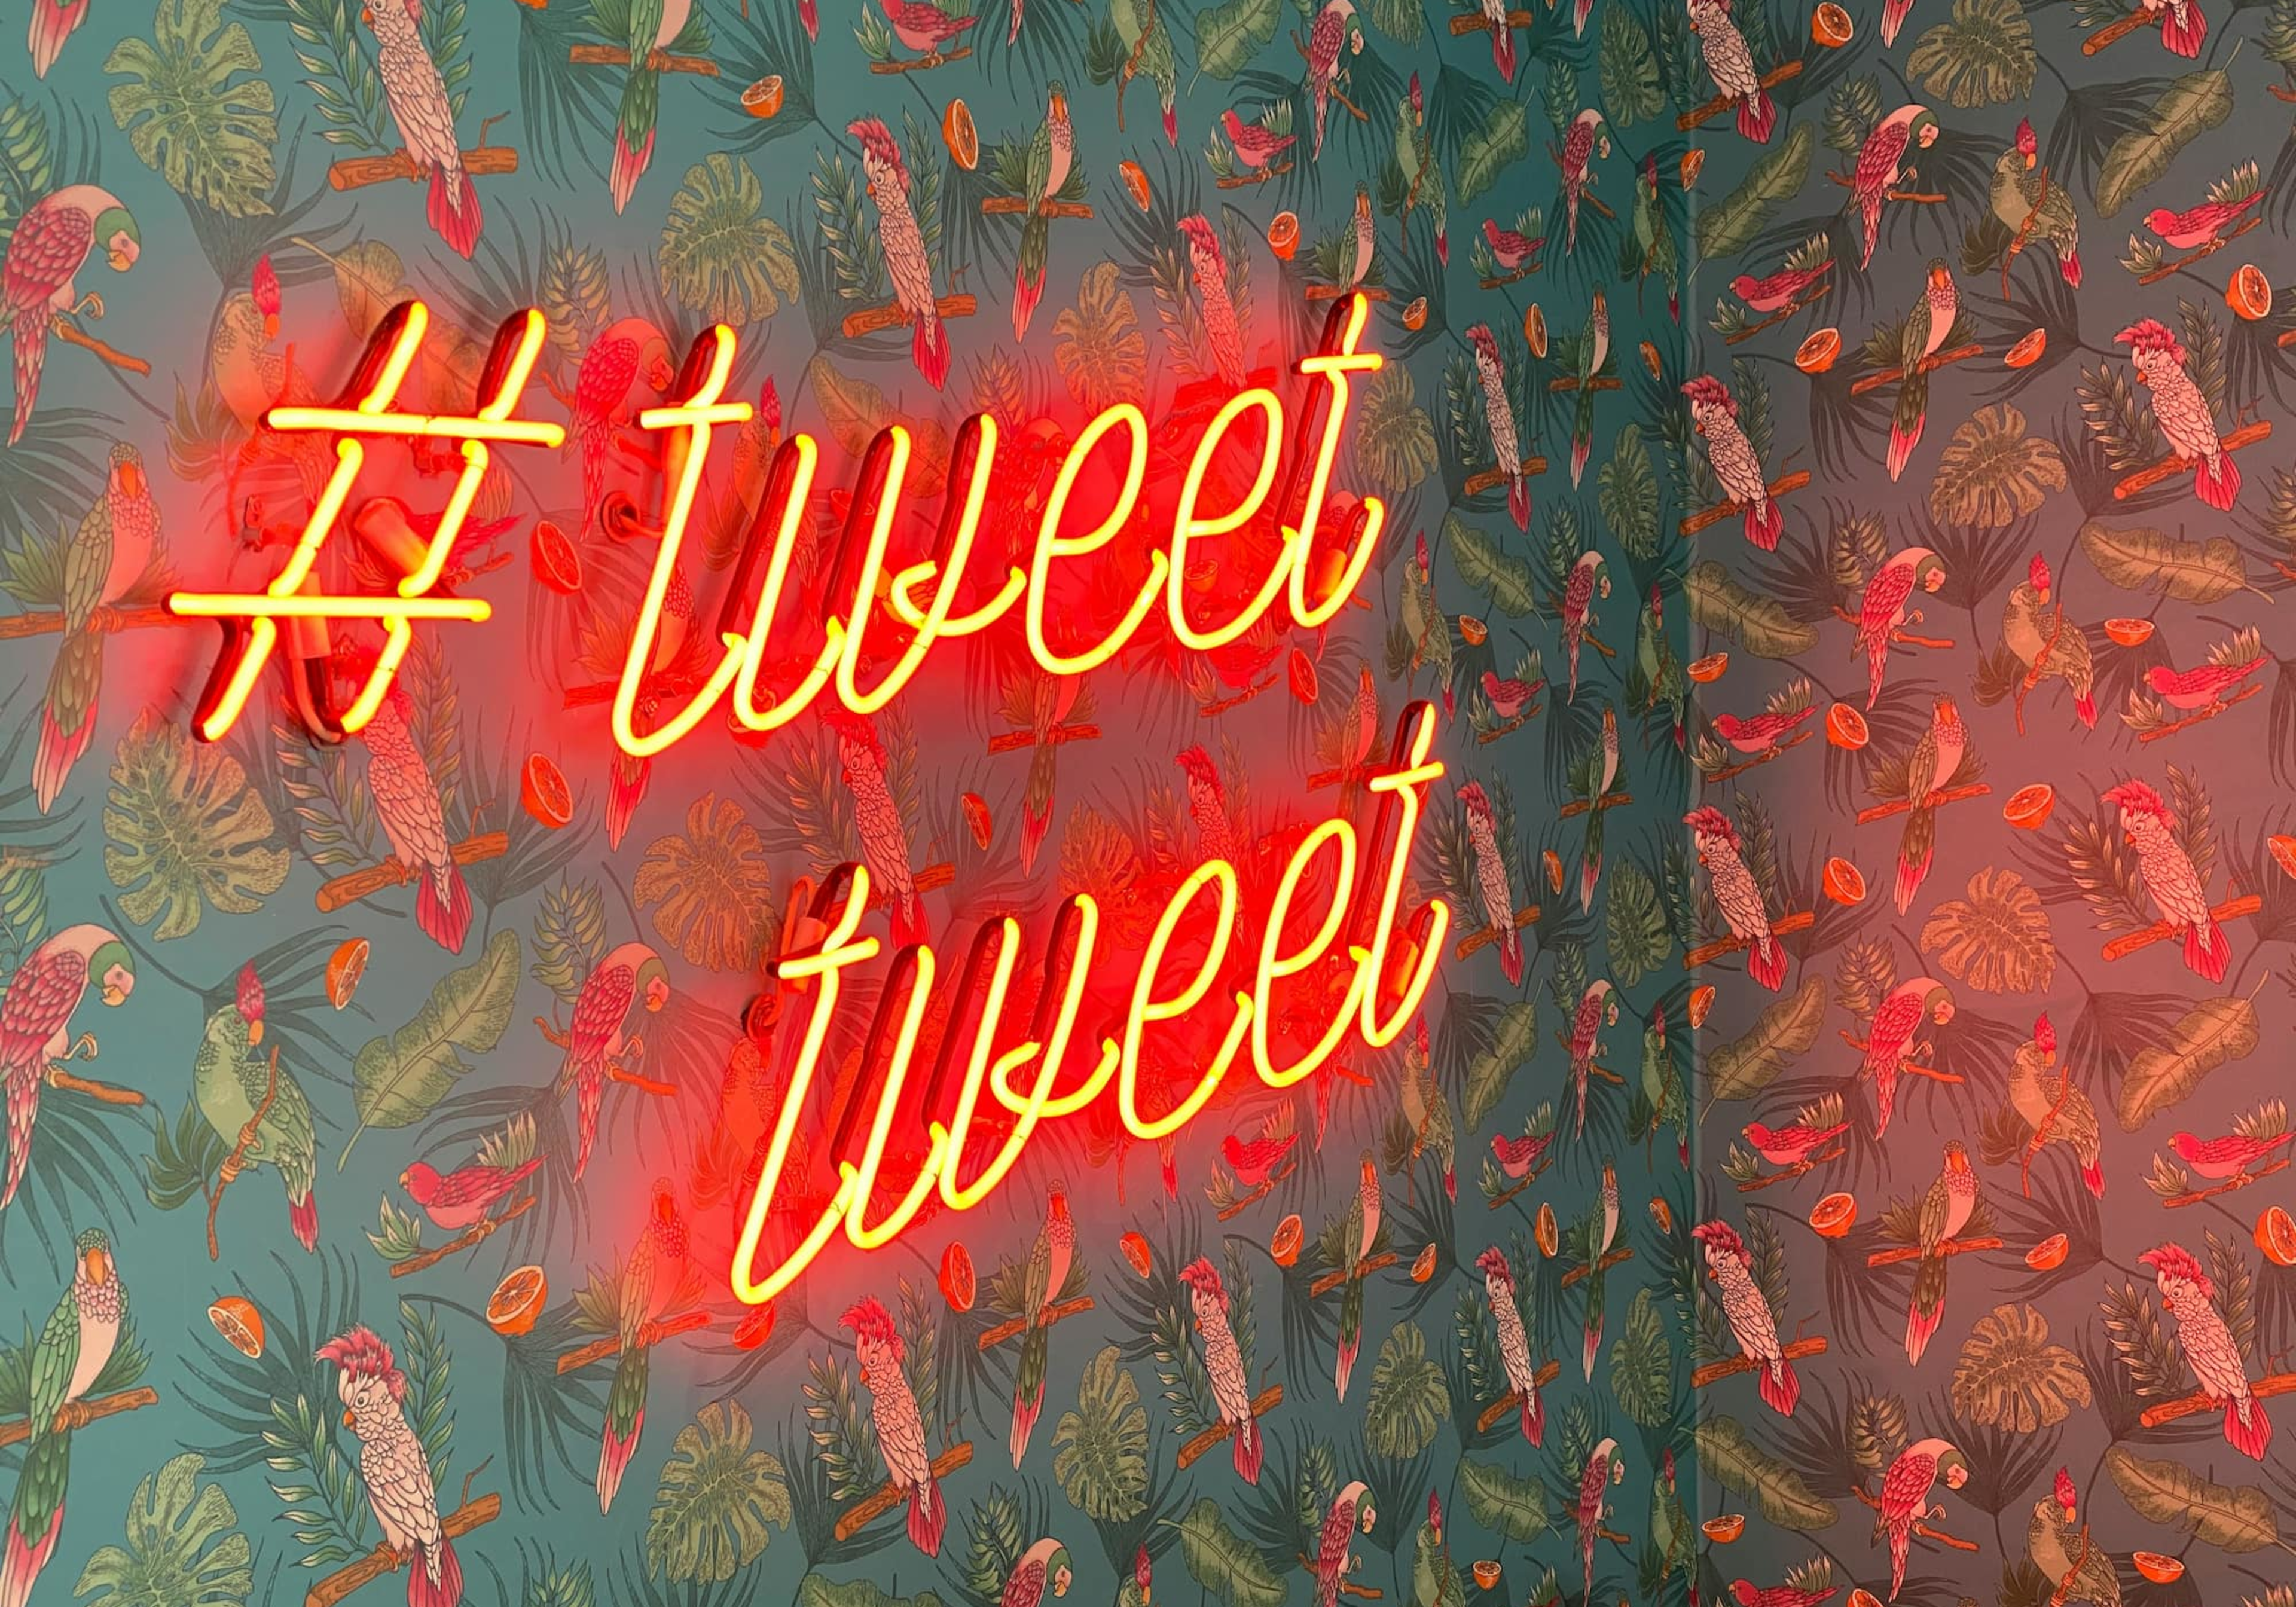 Neon sign saying Tweet Tweet on a patterned wall Photo by Chris J. Davis on Unsplash